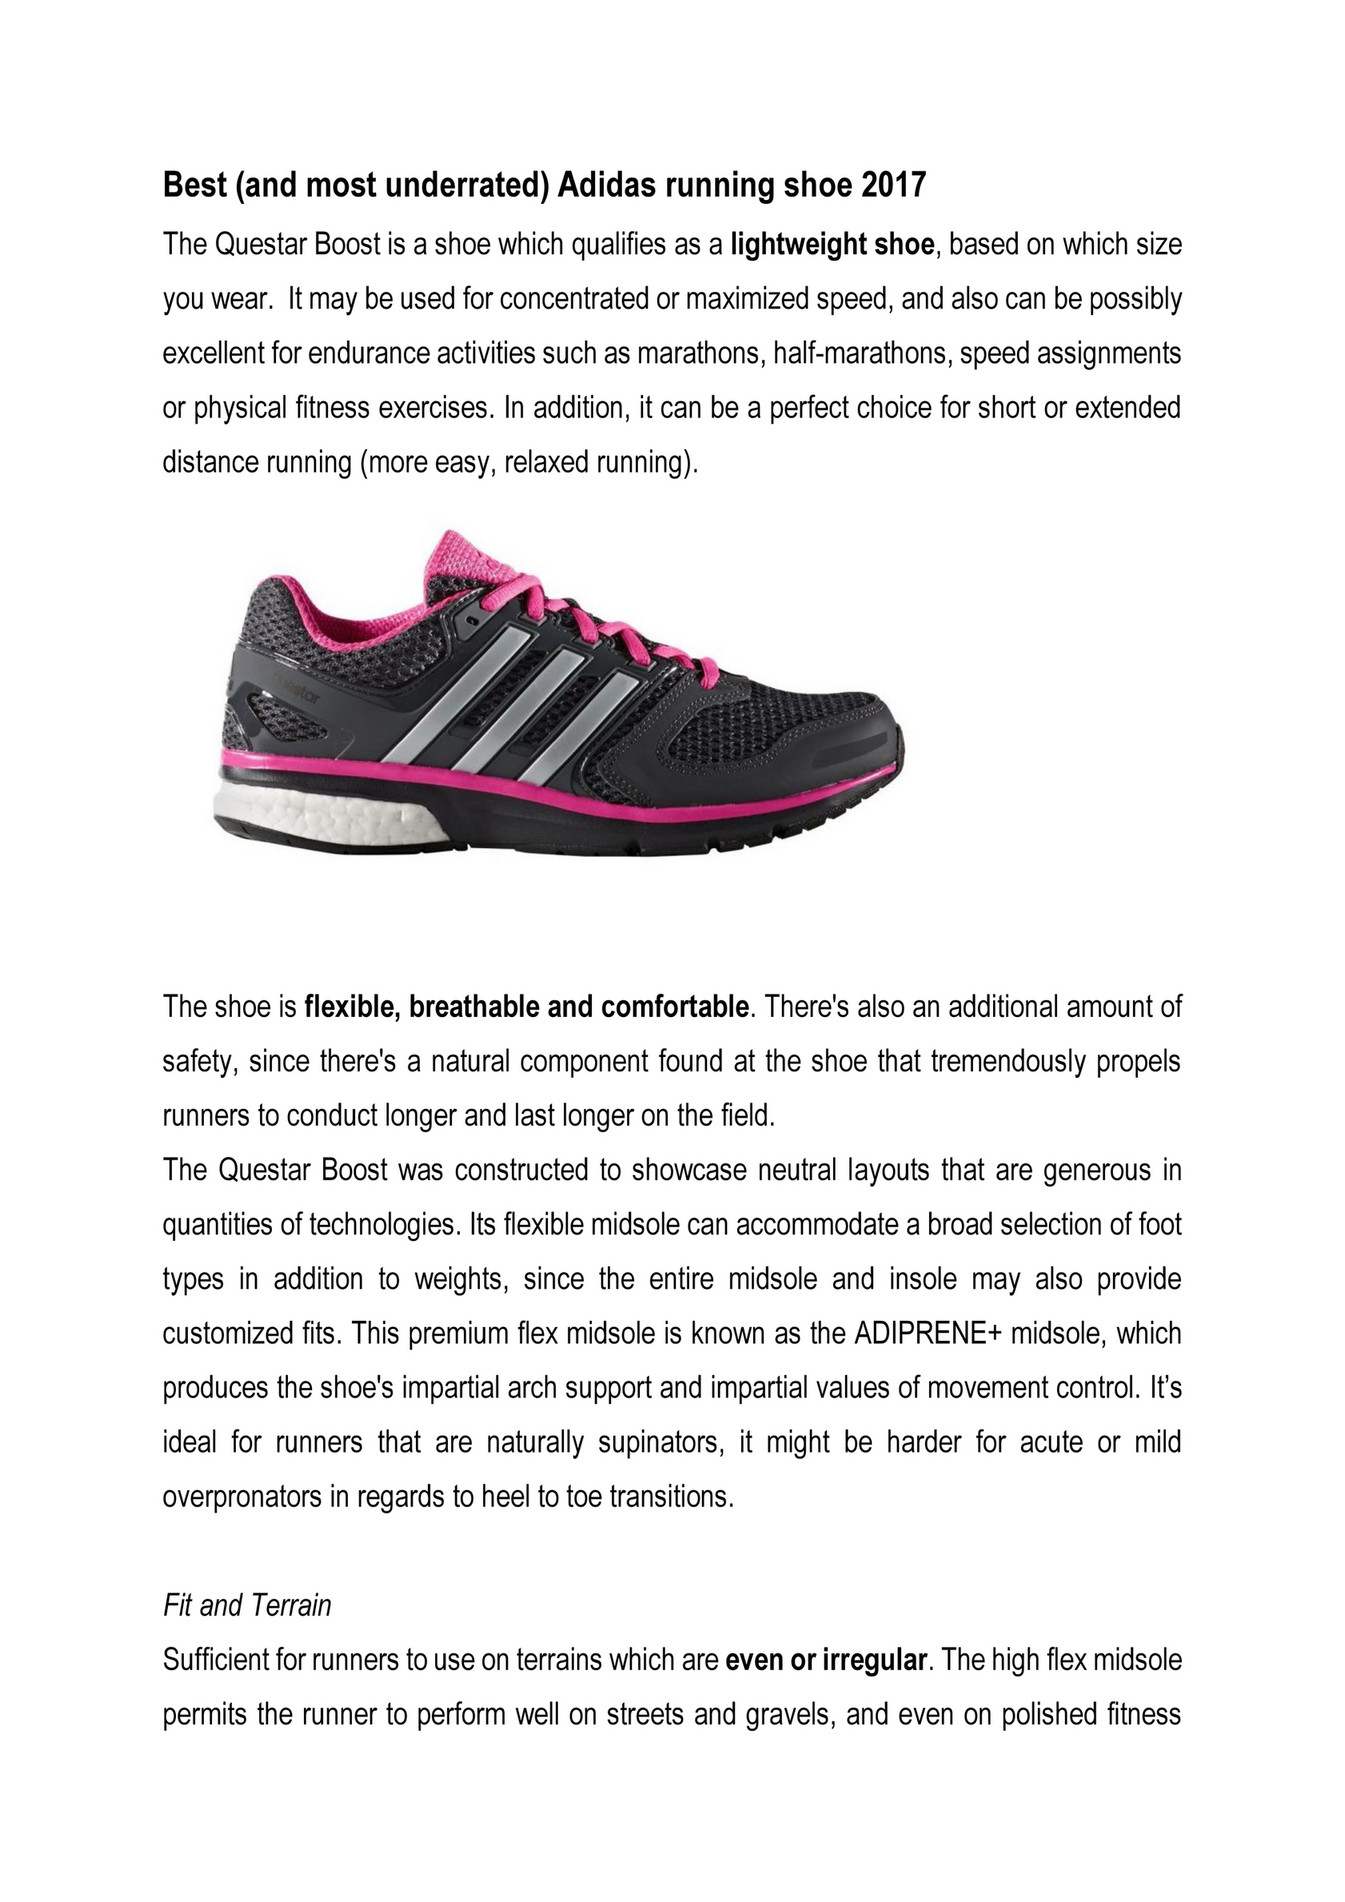 underrated Adidas running shoe 